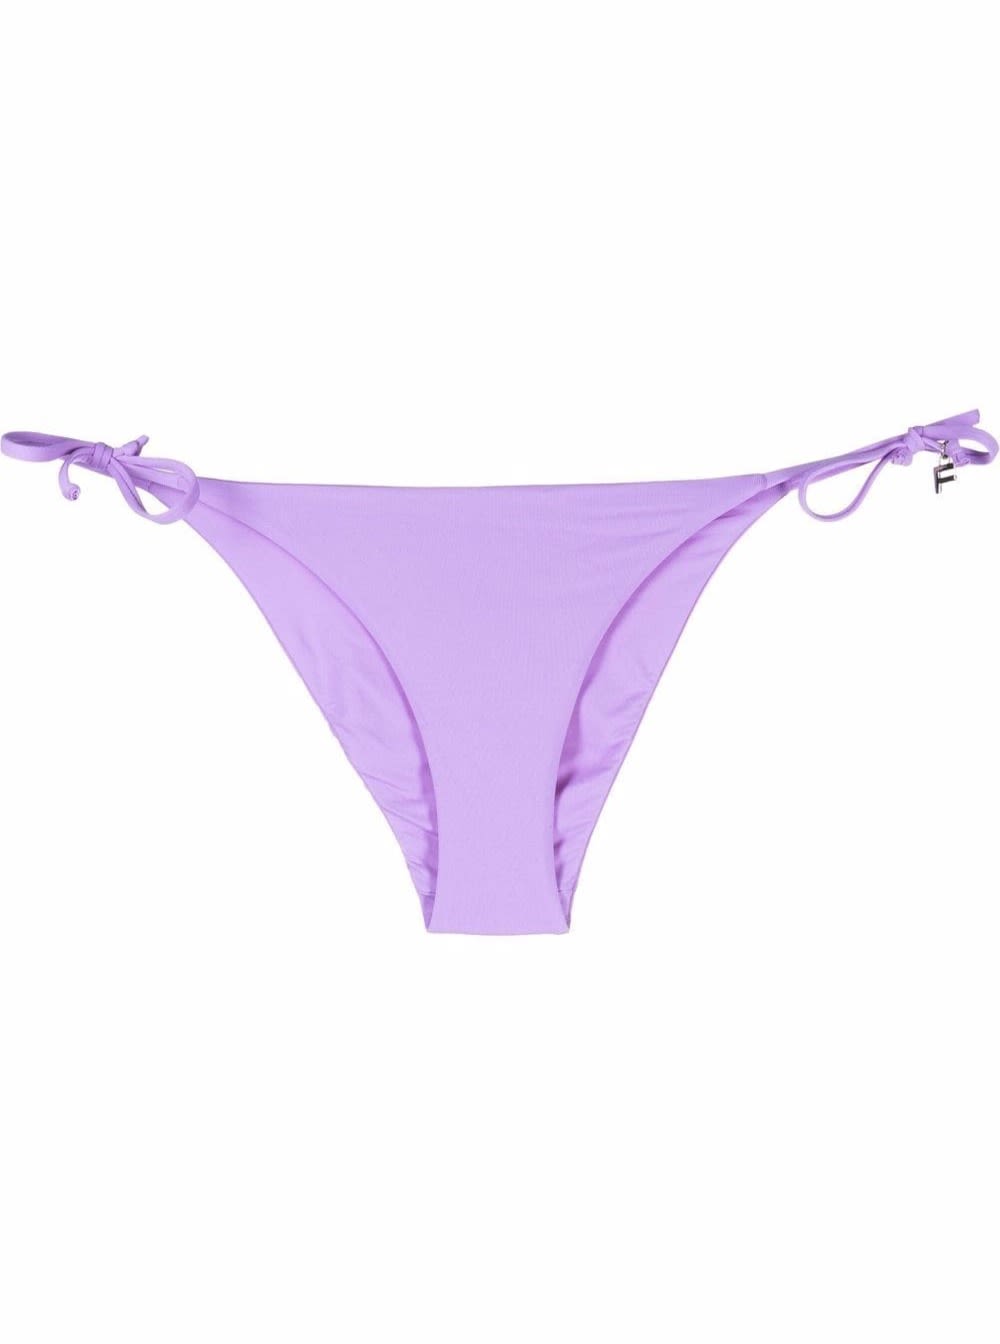 Fisico - Cristina Ferrari Fisico Womans Lilac Ribbed Fabric Bikini Bottom